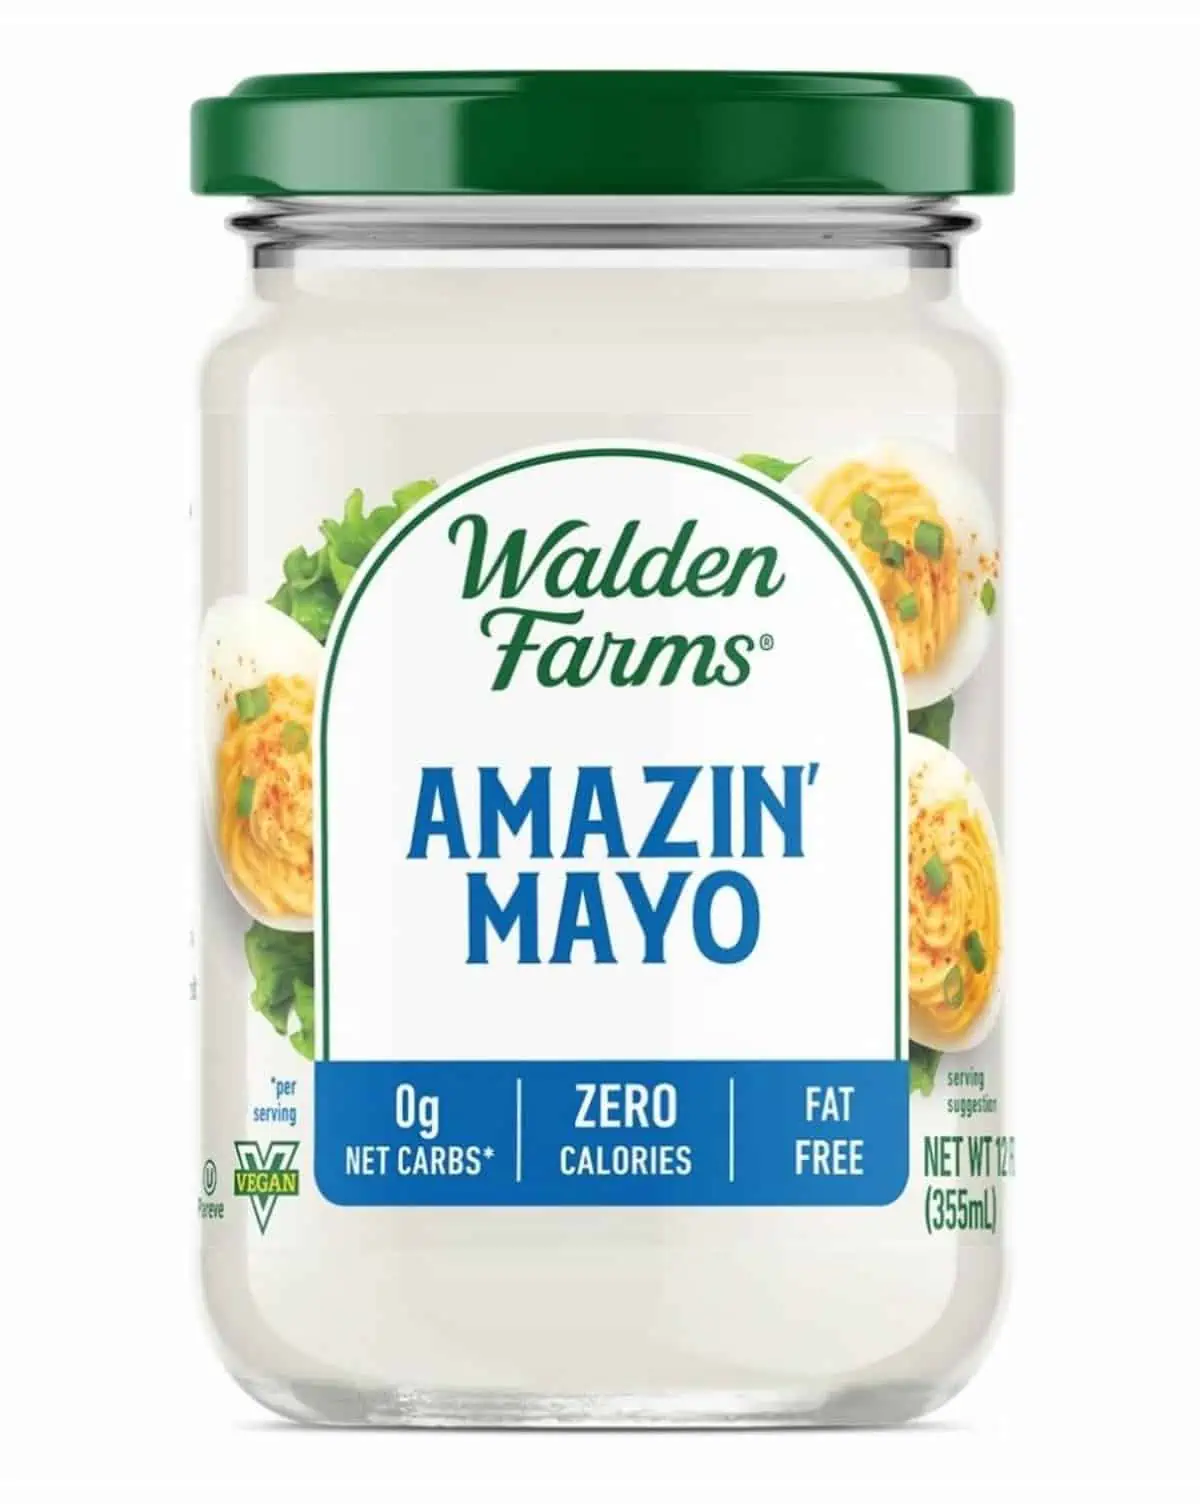 Walden Farms Amazin' Mayo brand vegan mayo.